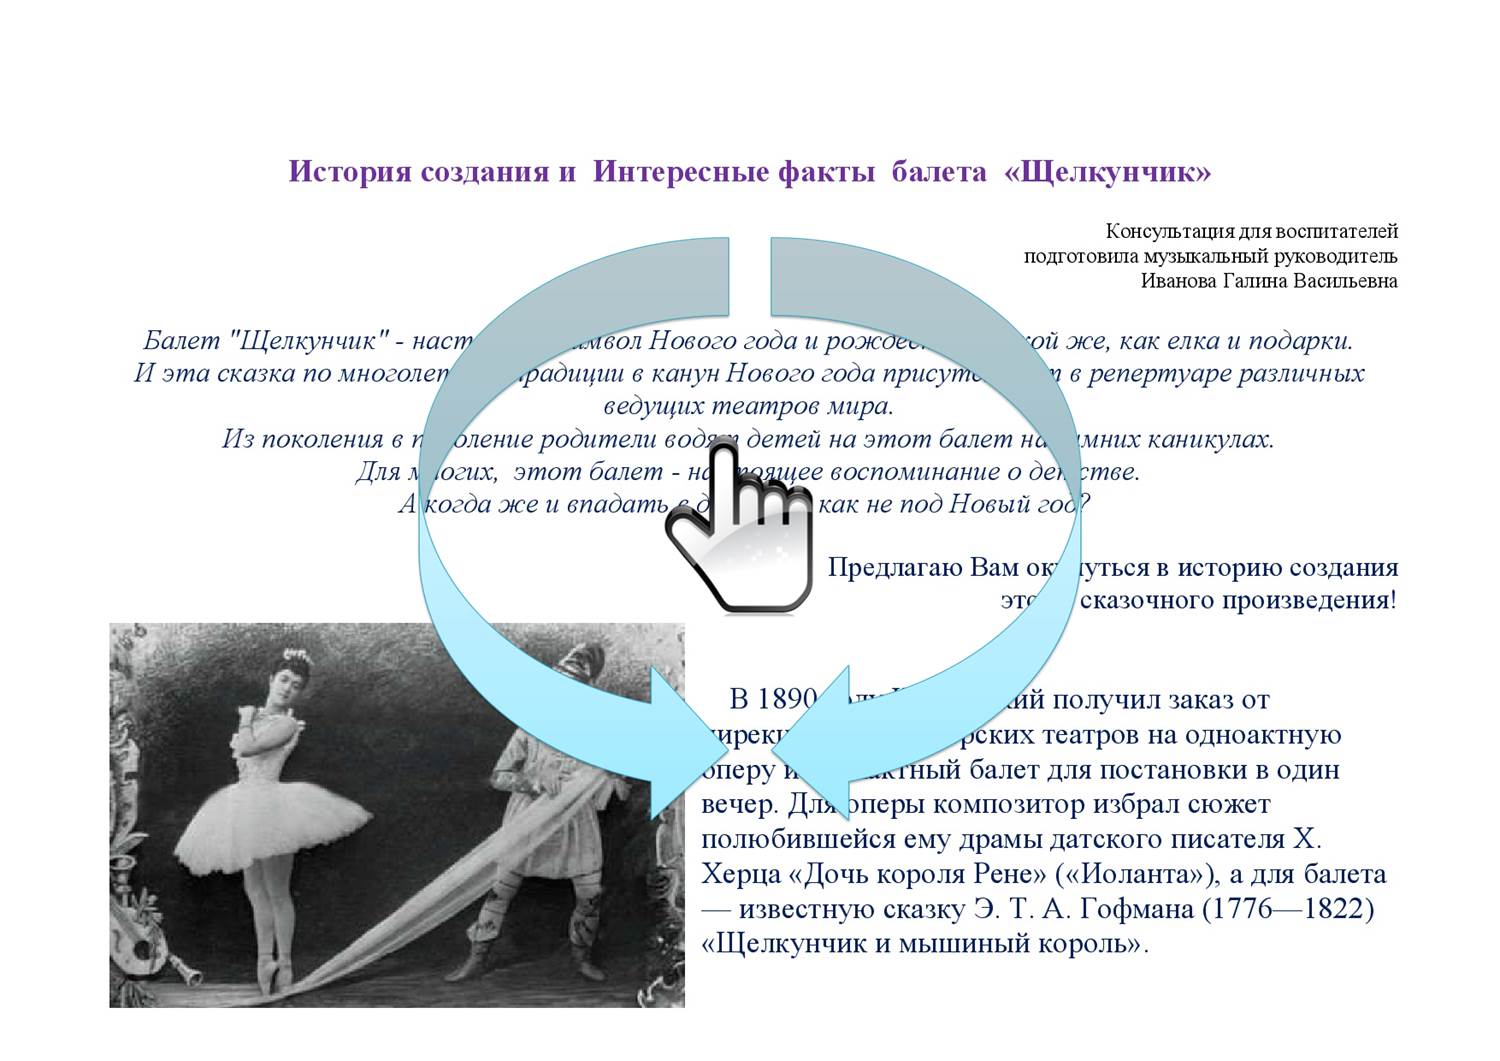 История создания балета. Интересные факты о балете.